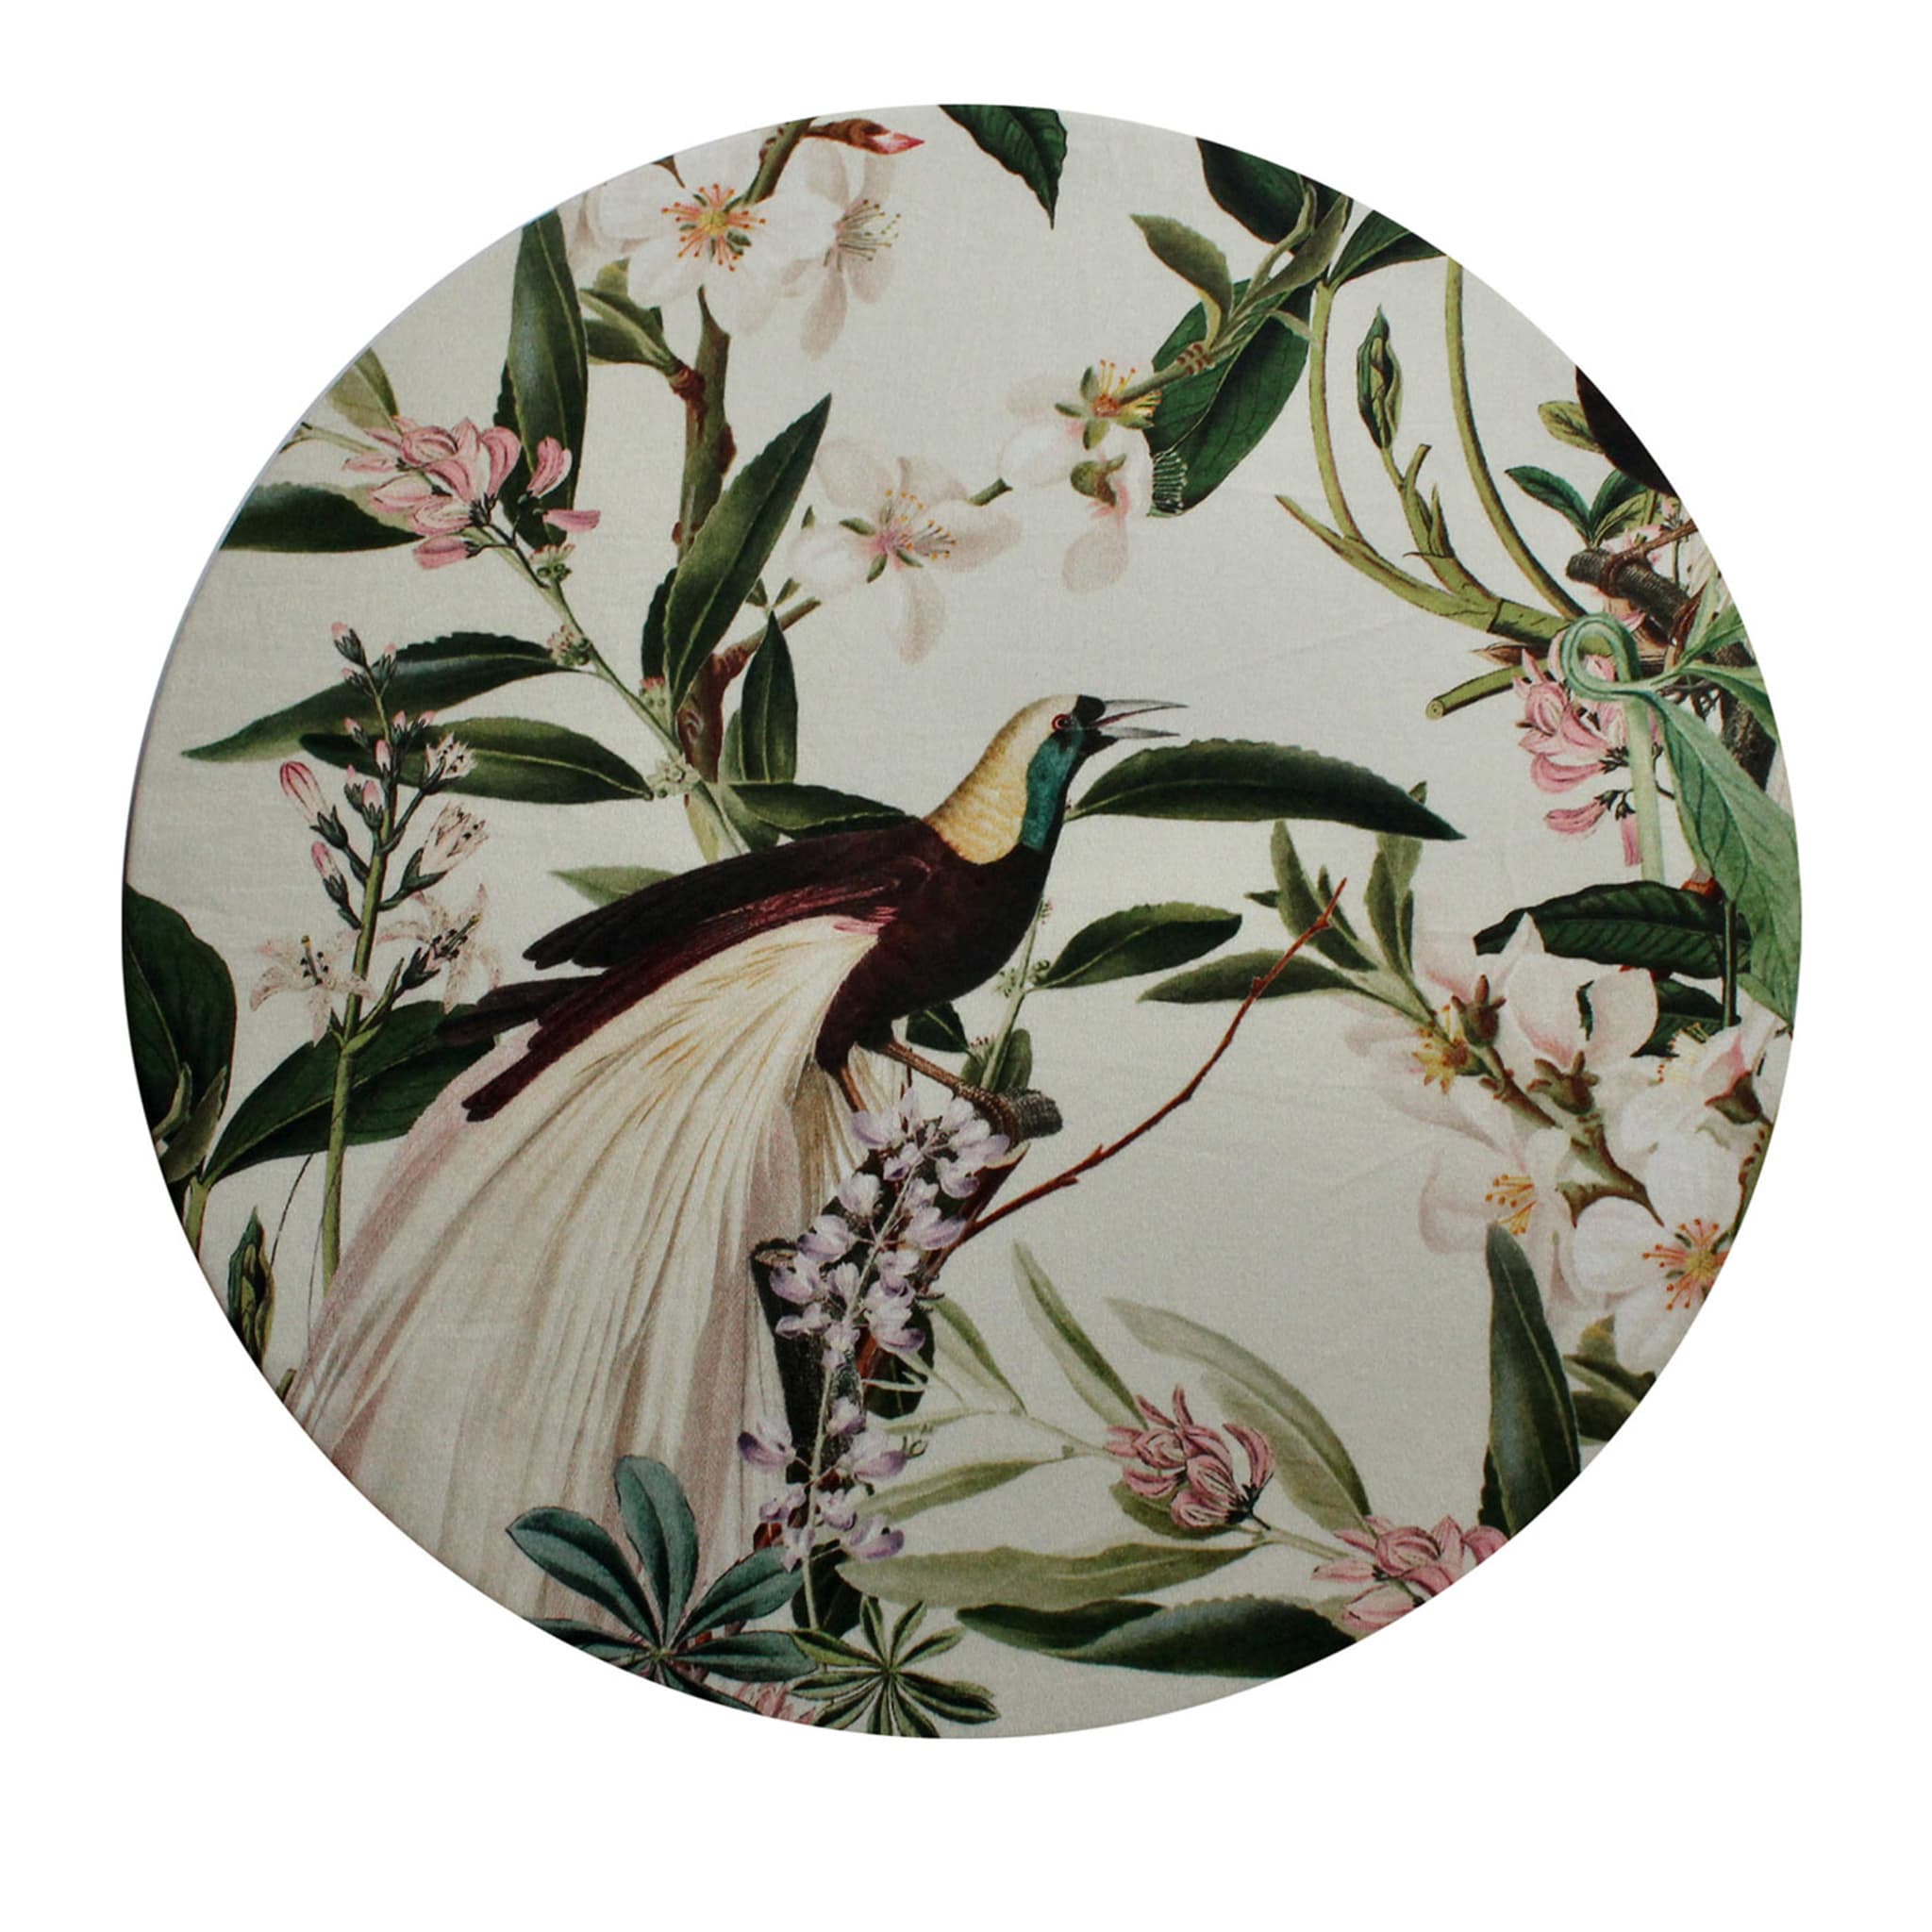 Cuffiette Bird & Flowers Round Polychrome Placemat - Main view